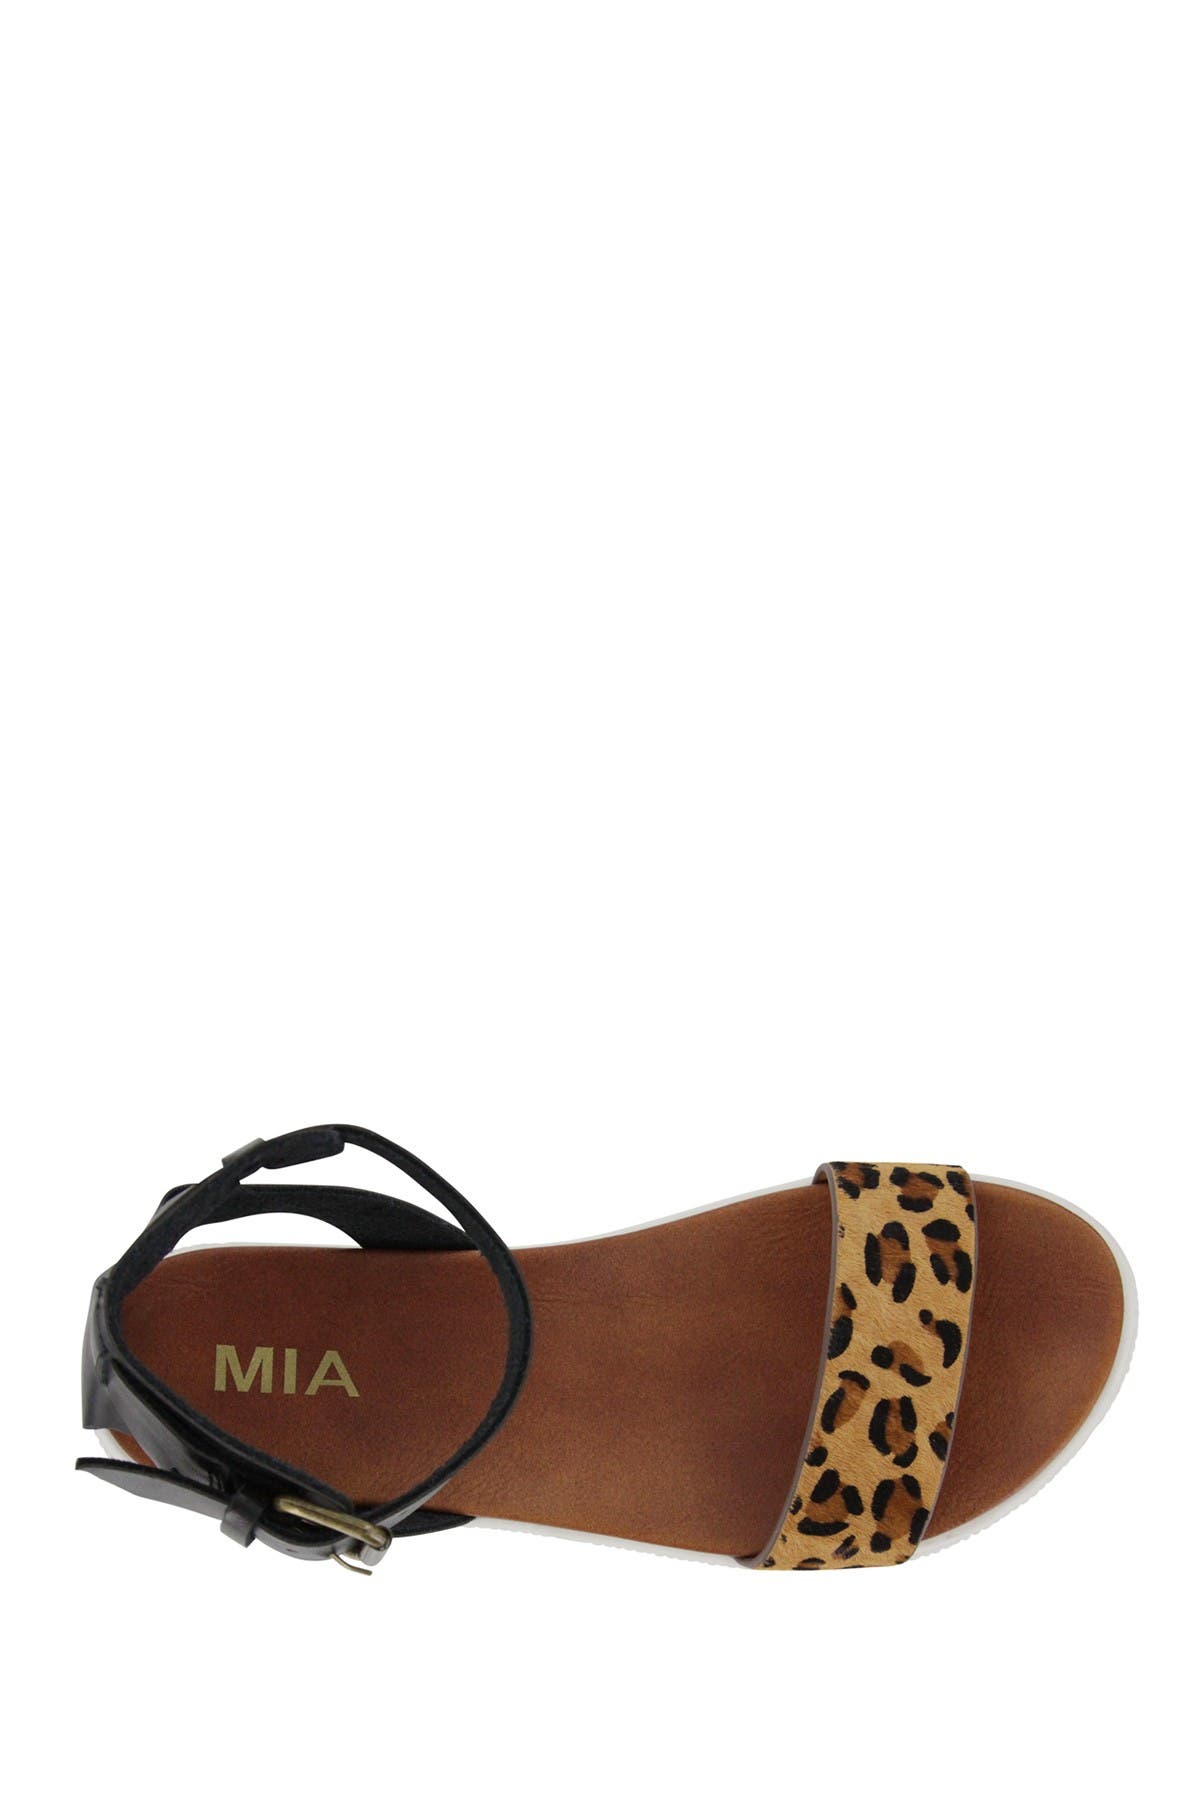 mia leopard sandals